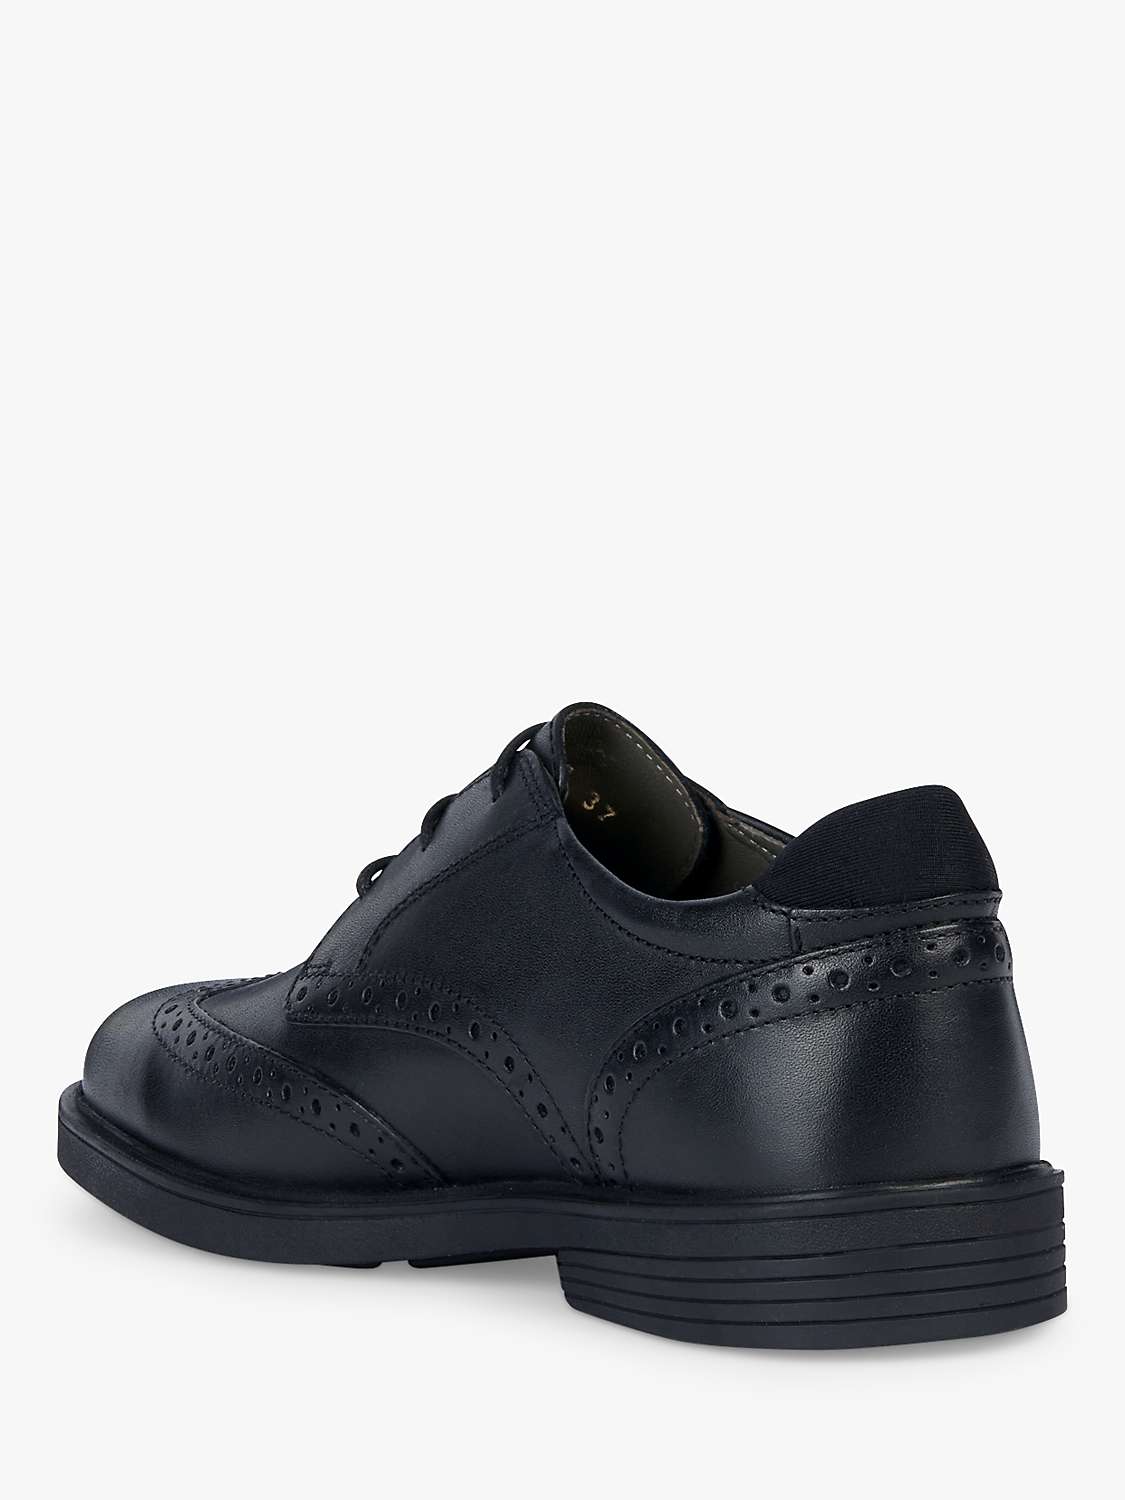 Buy Geox Kids' Zheeno Brouge Shoes, Black Online at johnlewis.com